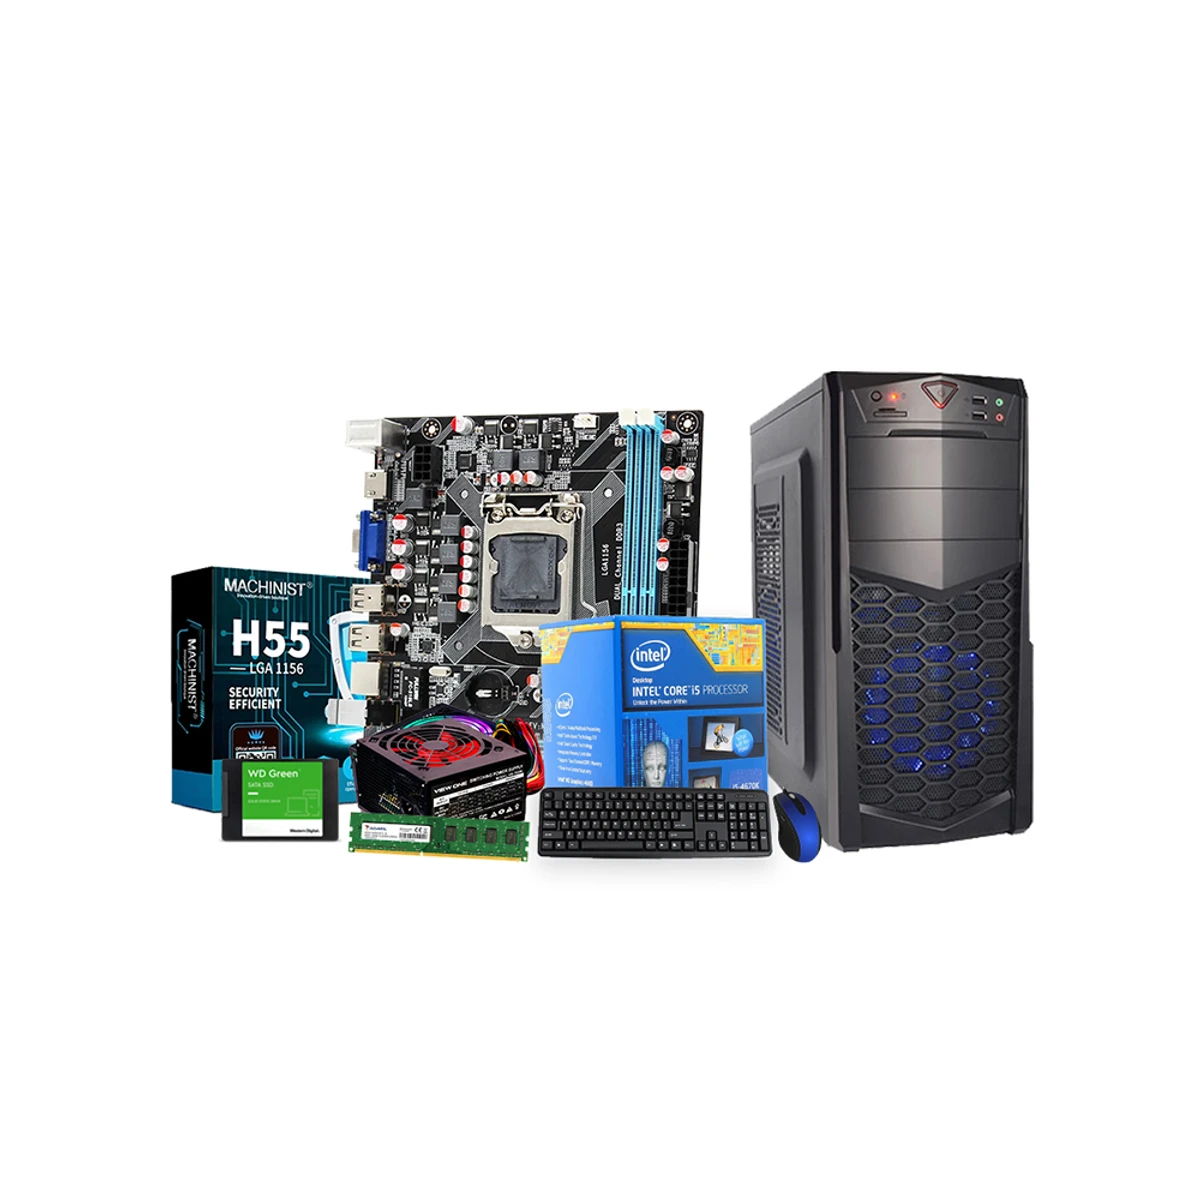 Intel Core i5 1st Gen H-55 Motherboard 4GB 120GB Budget Offer PC